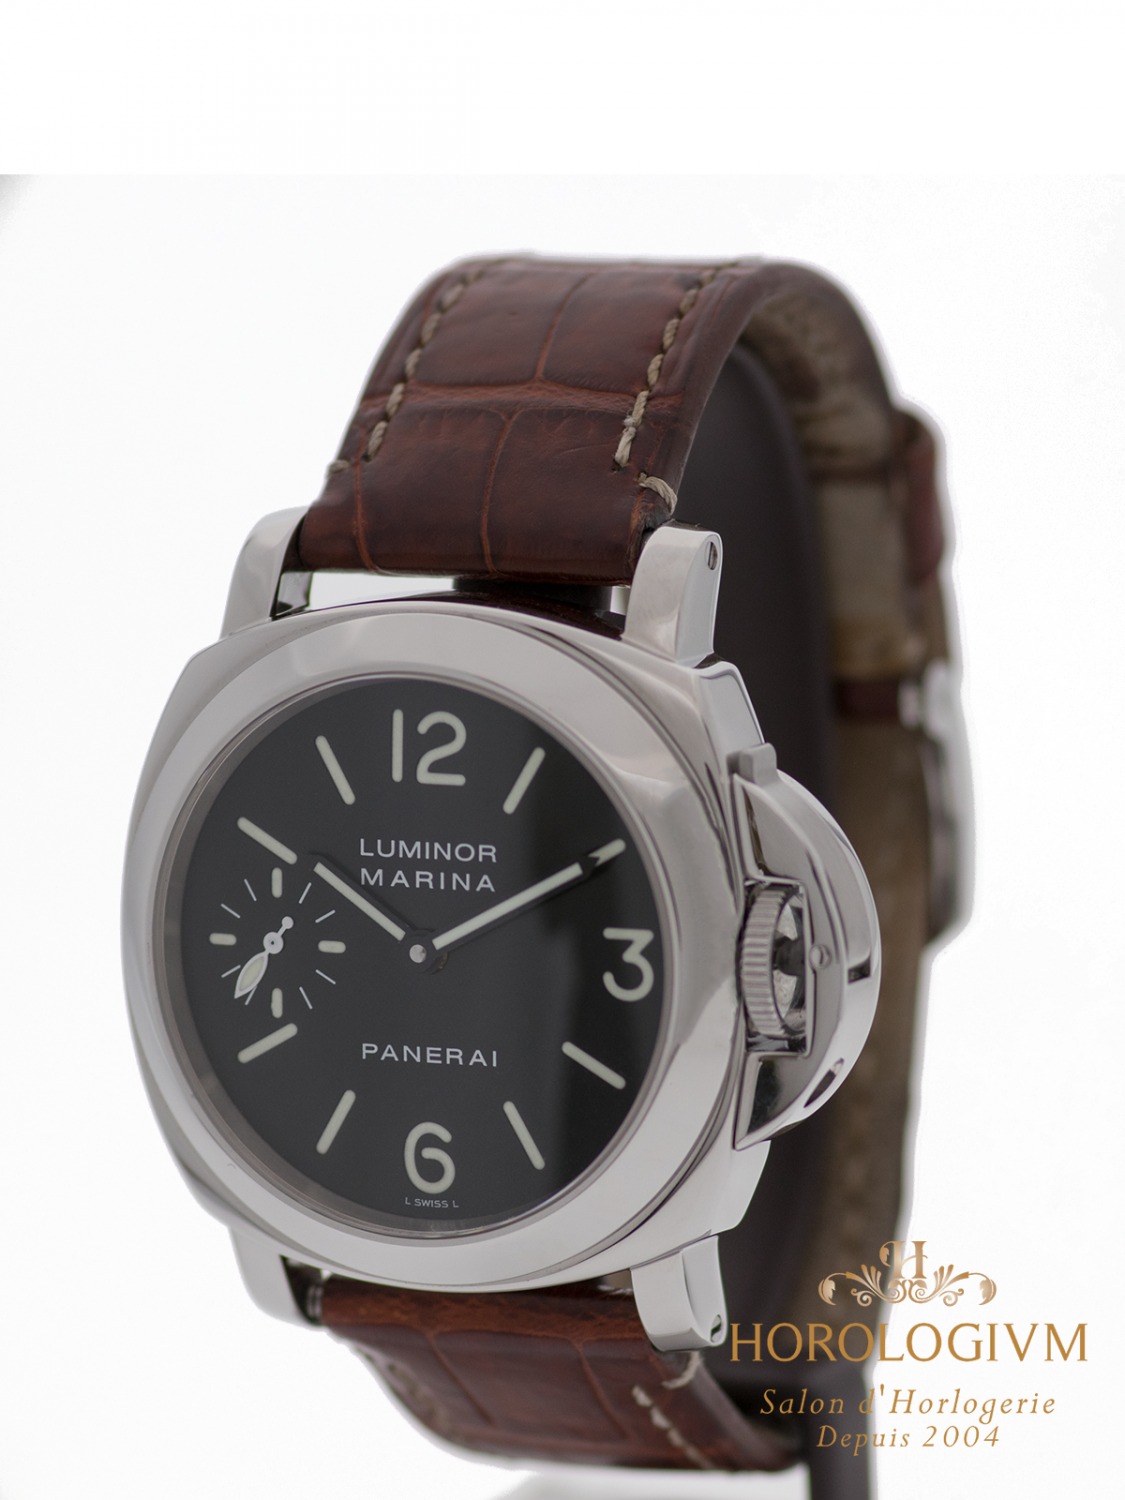 Panerai Luminor Marina Ref. PAM00001 watch, brushed silver